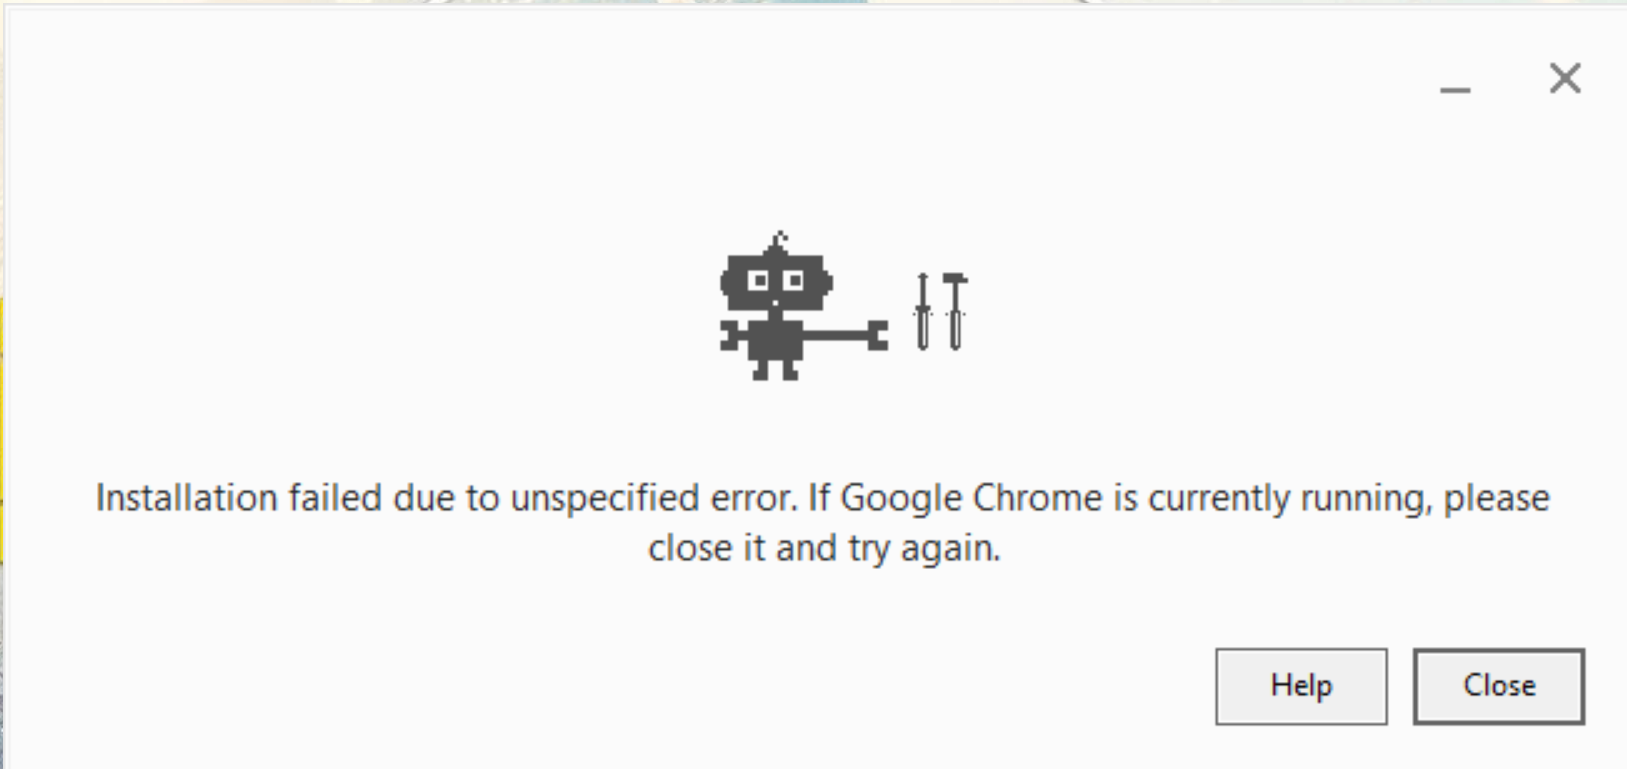 Ошибка Google Chrome. Google Chrome hata. Ошибка хром скачивания. Ошибка установки гугл хром. Google https ошибка